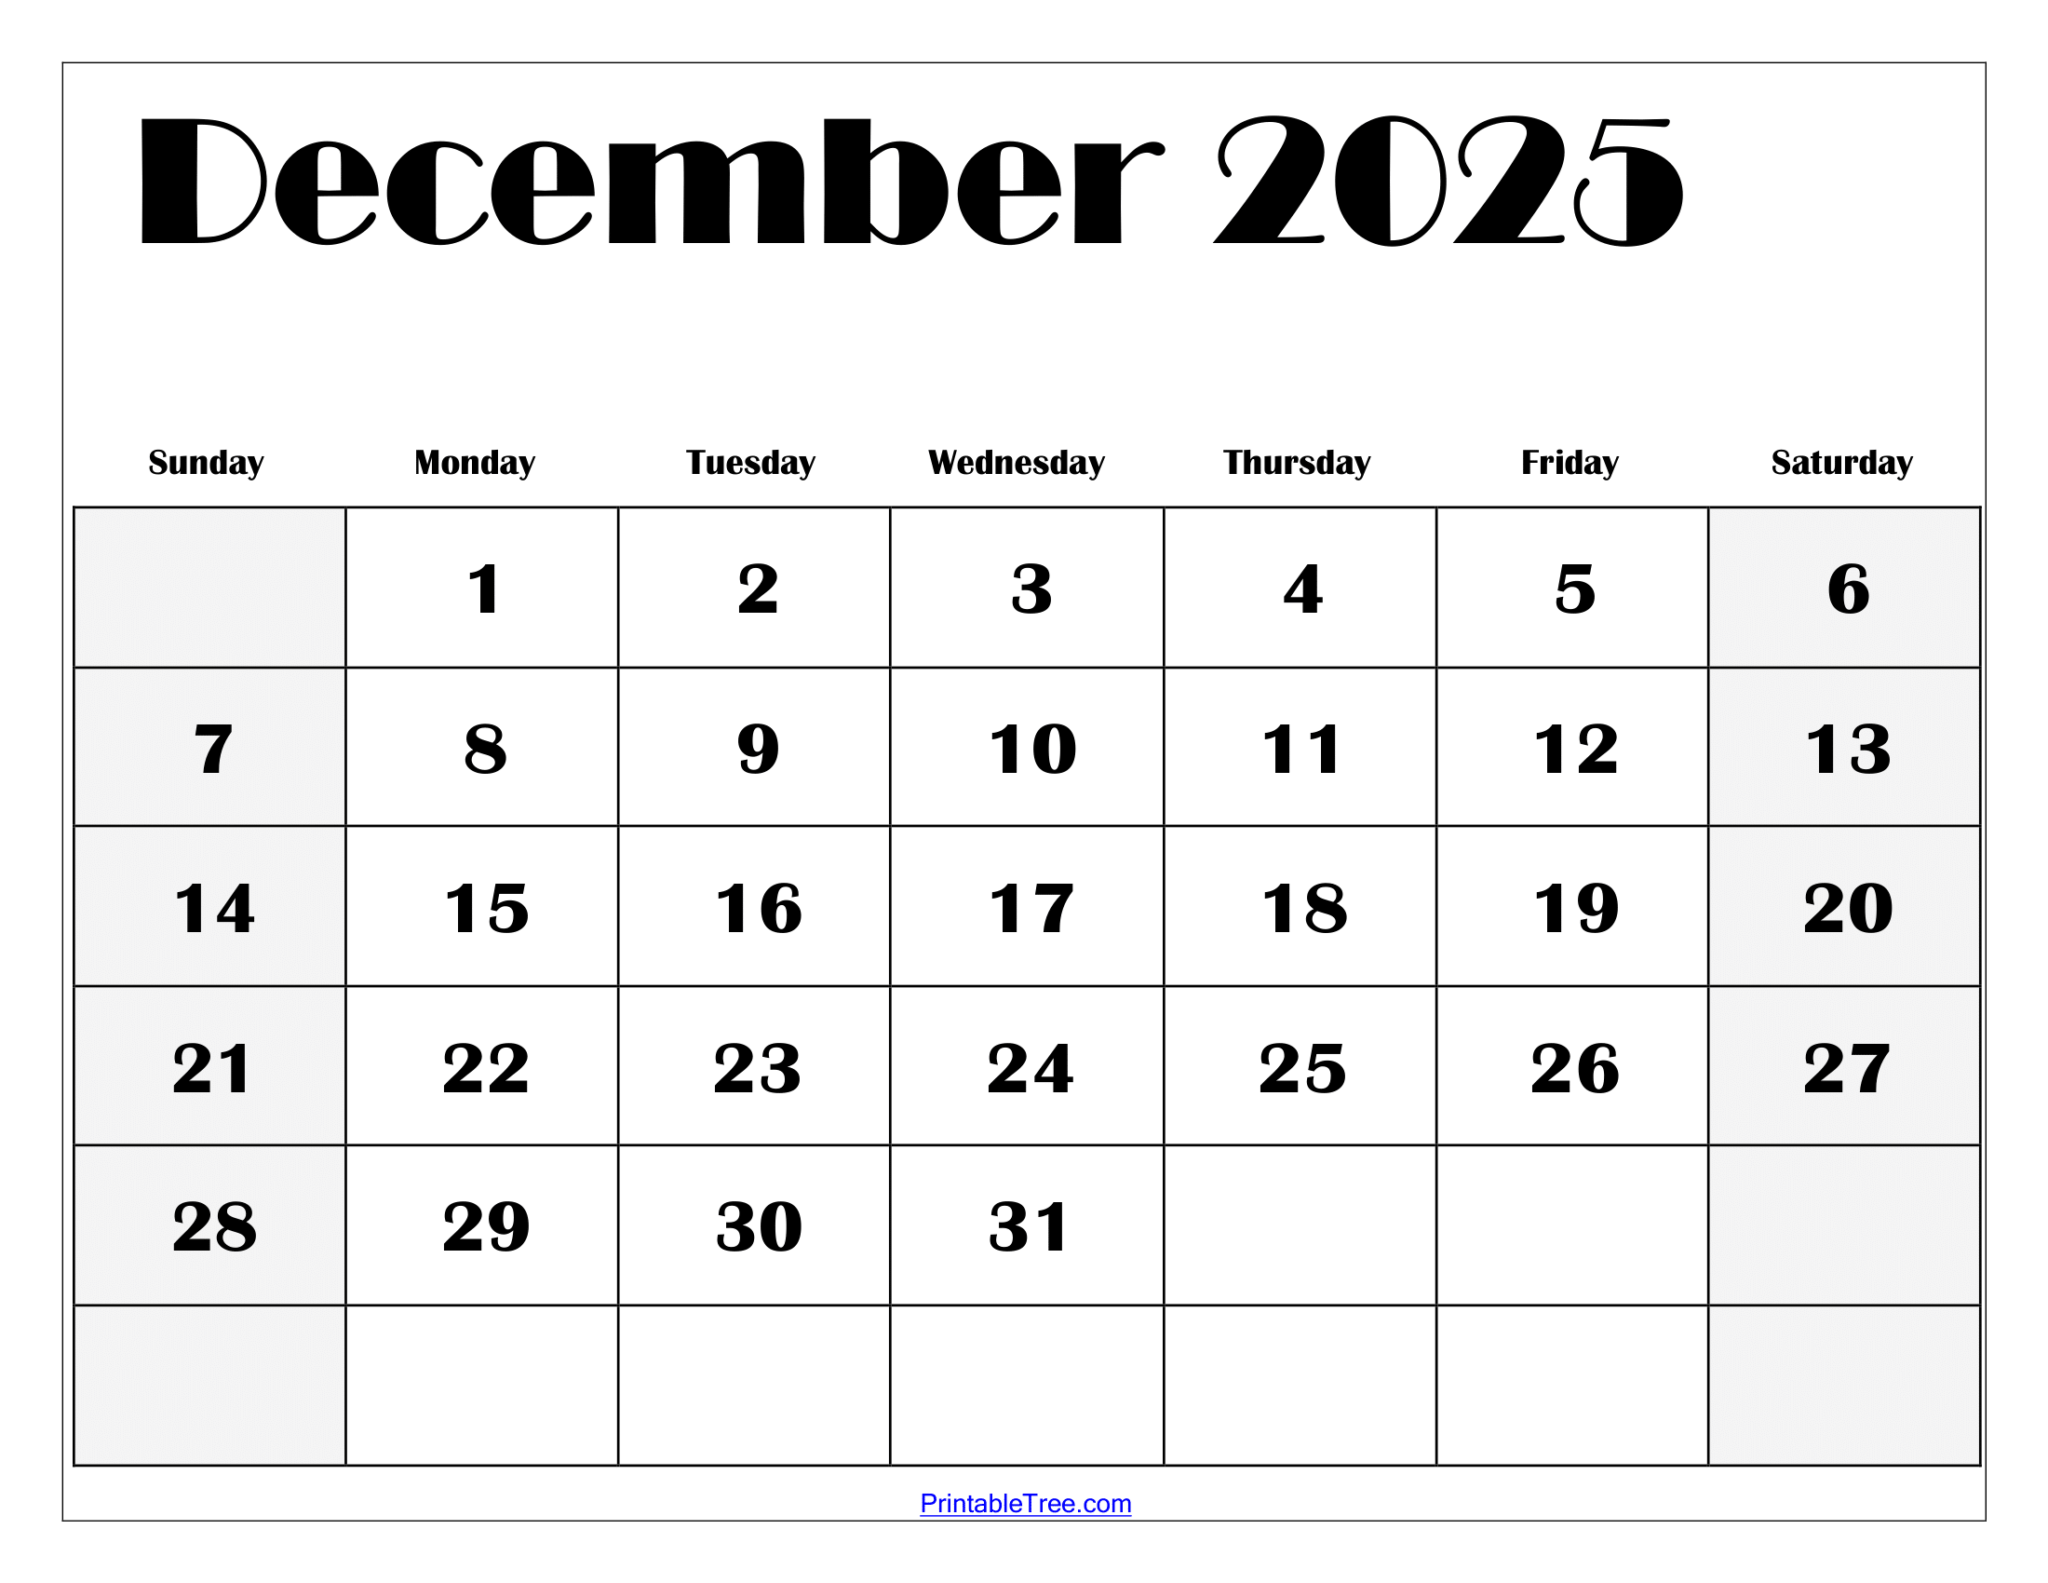 December 2025 Calendar Printable PDF Template with Holidays